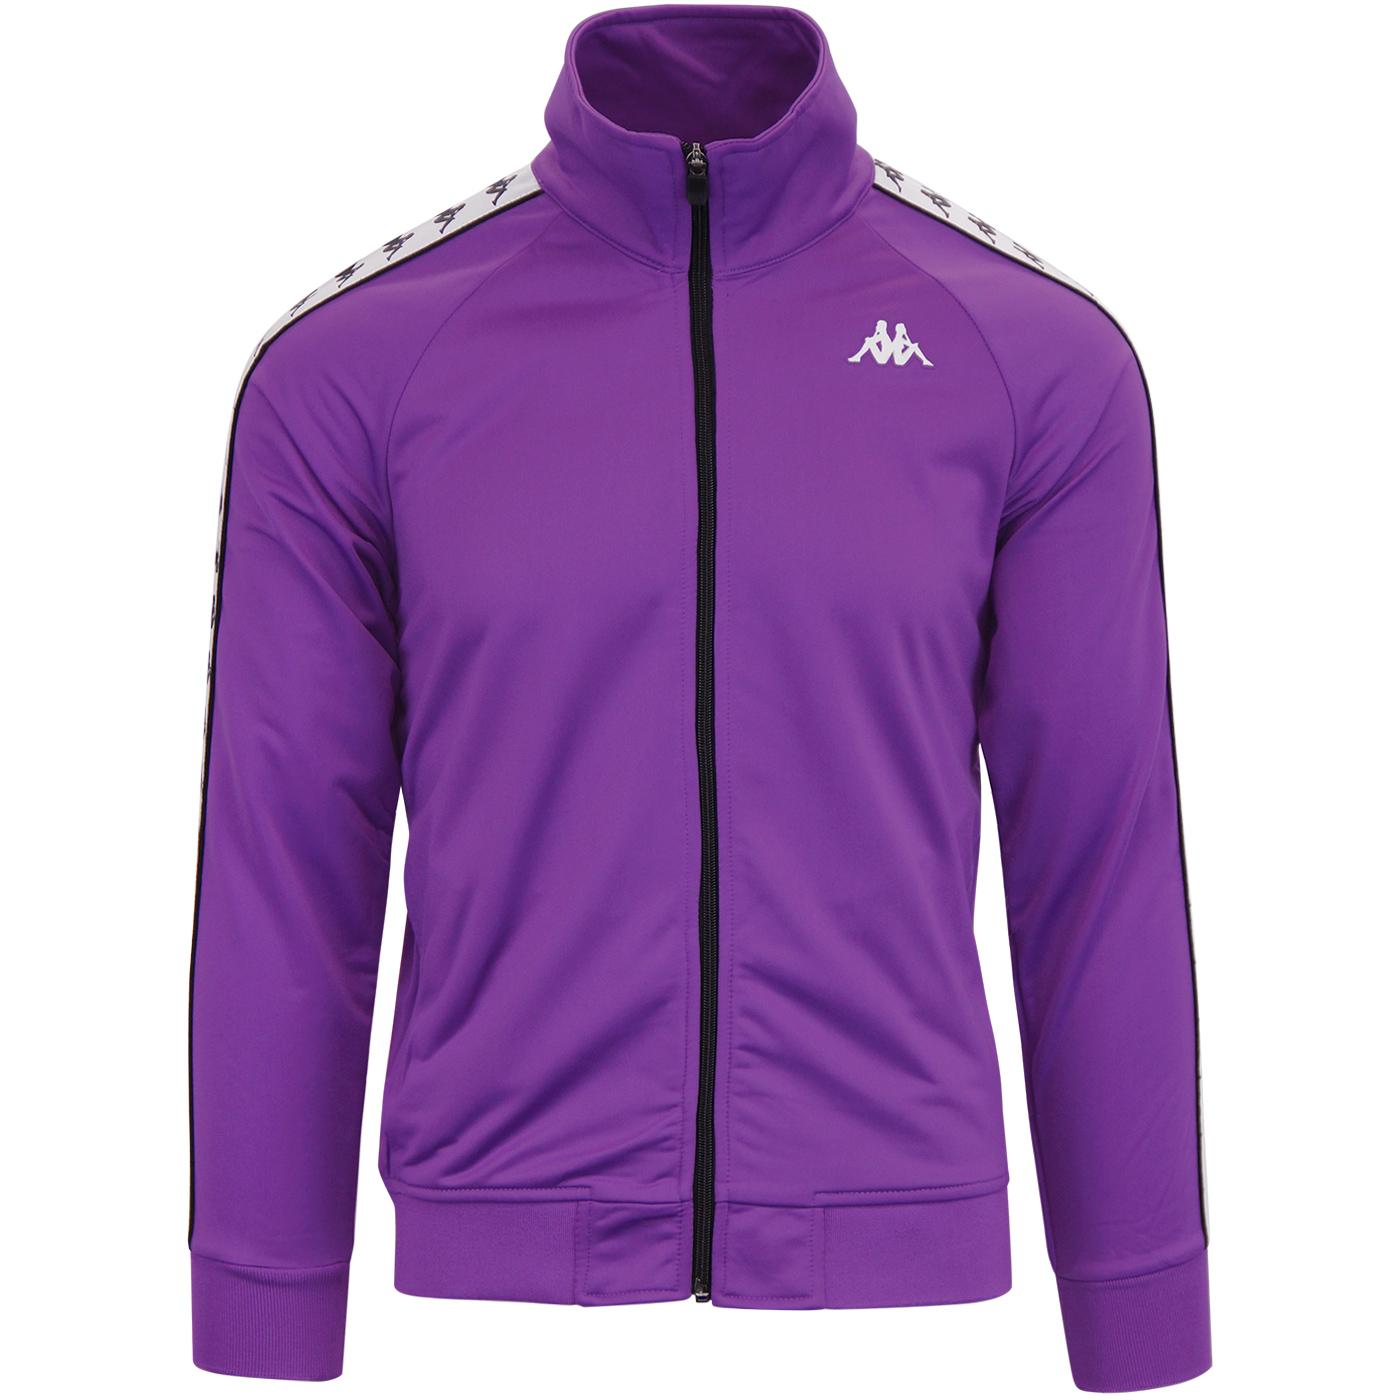 kappa violet jacket